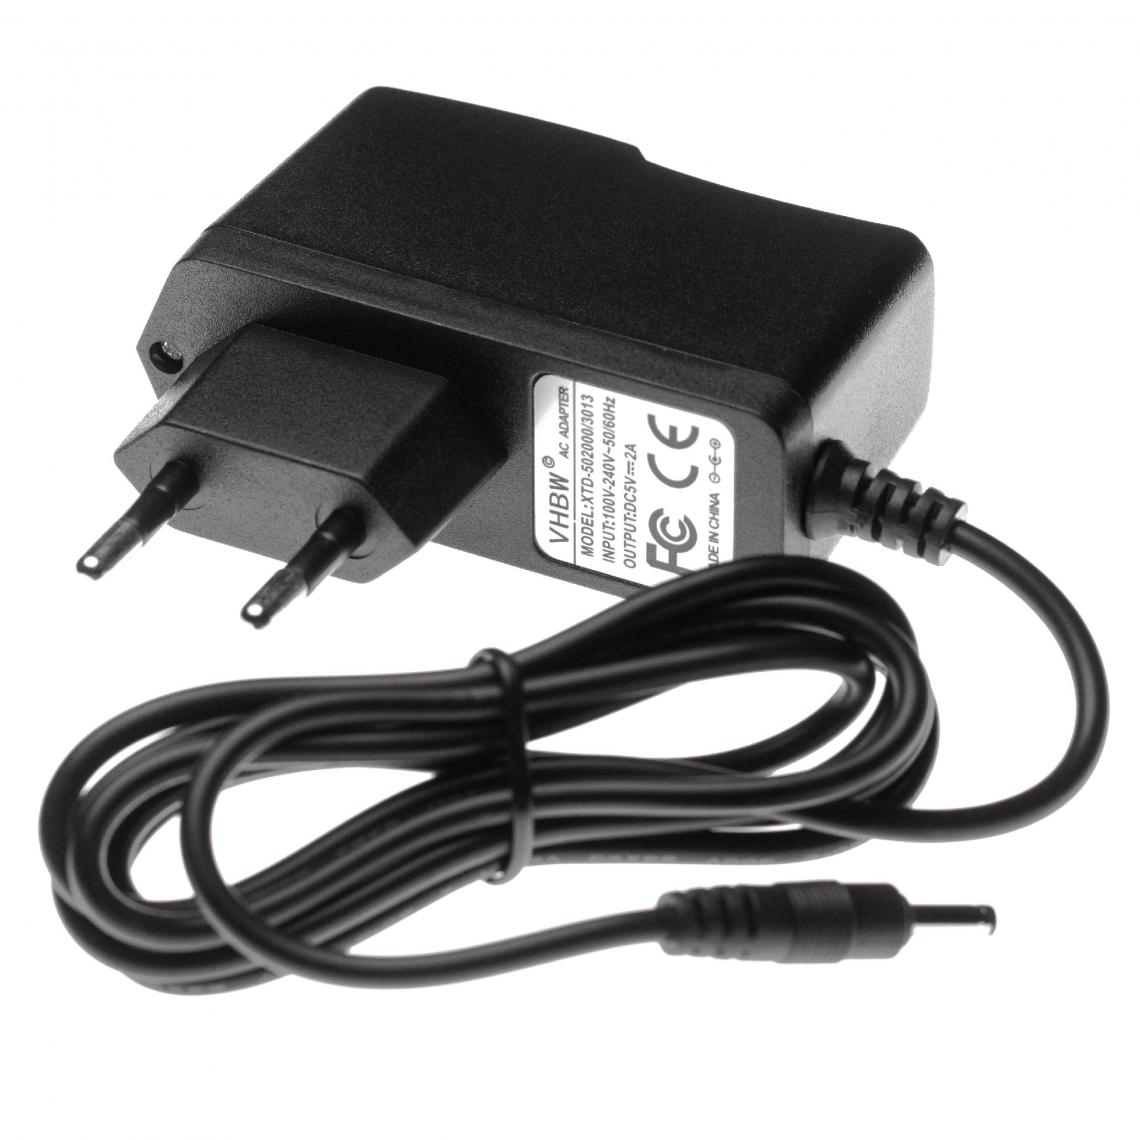 Vhbw - vhbw Chargeur, câble d'alimentation remplace Honeywell 4600870 pour POS scanner code barres - Caméras Sportives